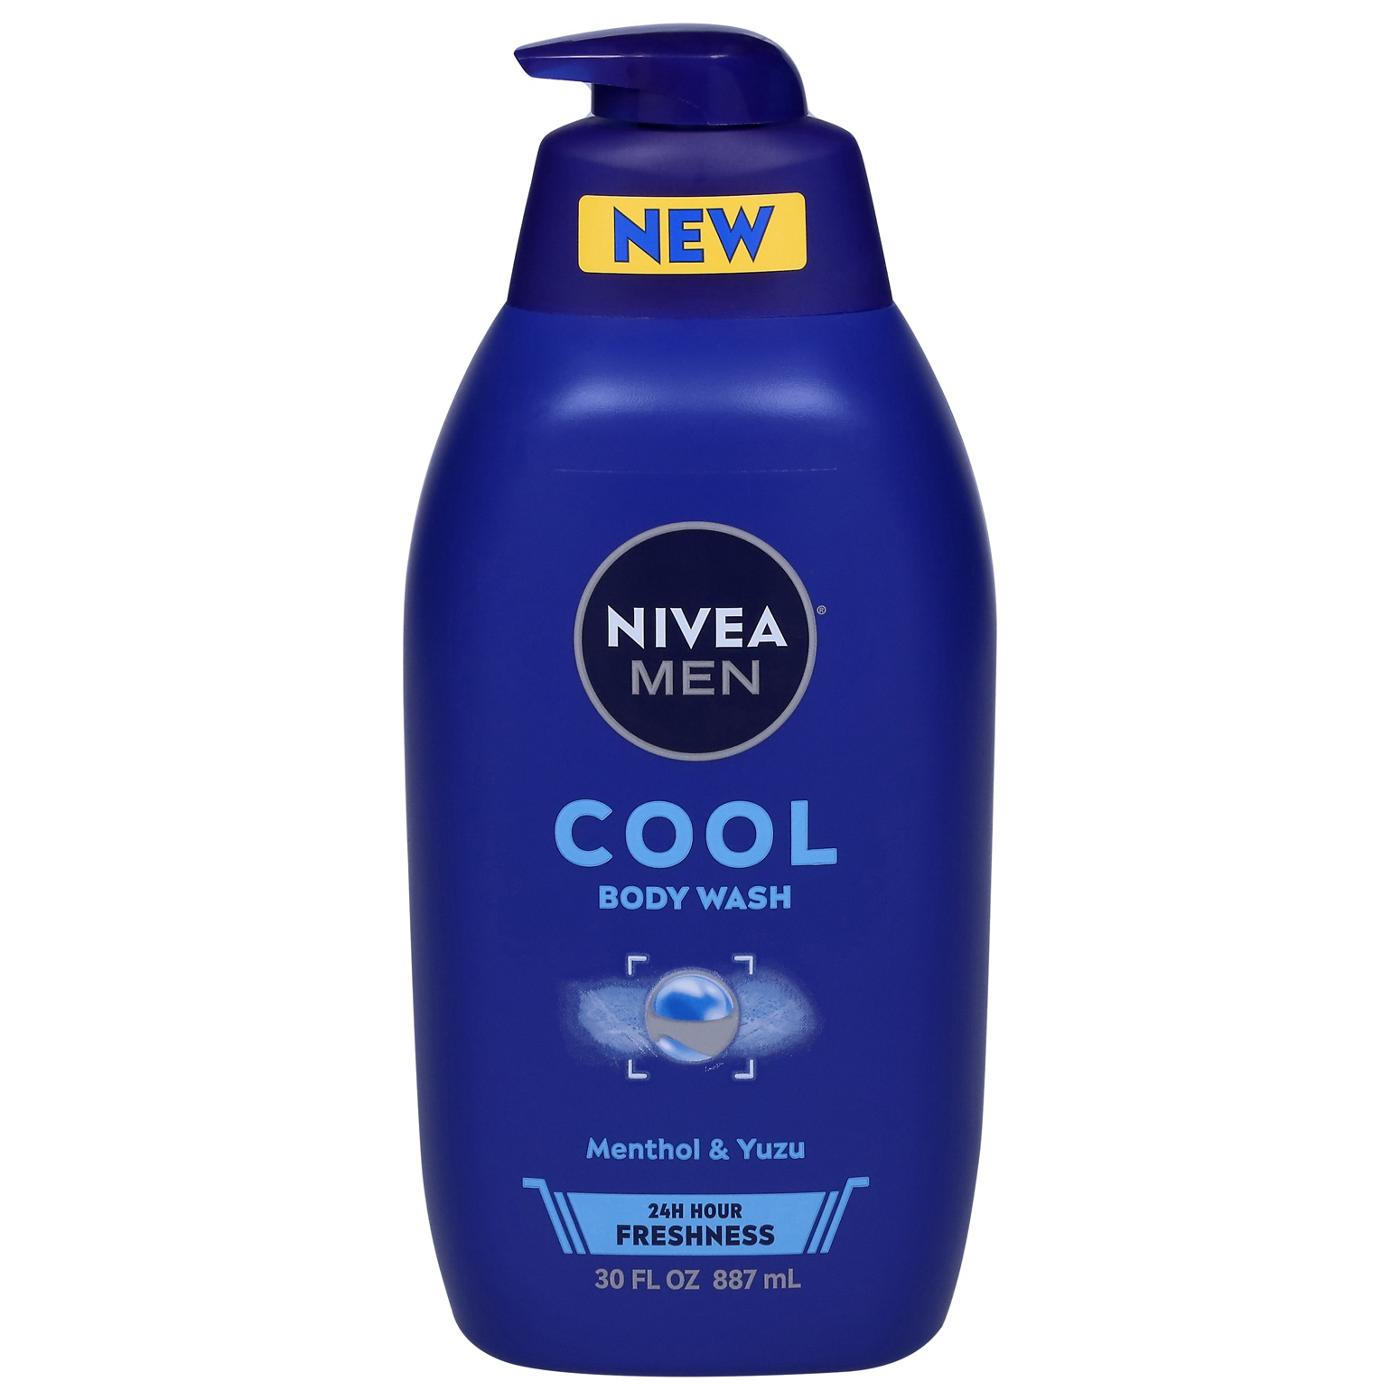 NIVEA Men Body Wash - Cool ; image 1 of 2